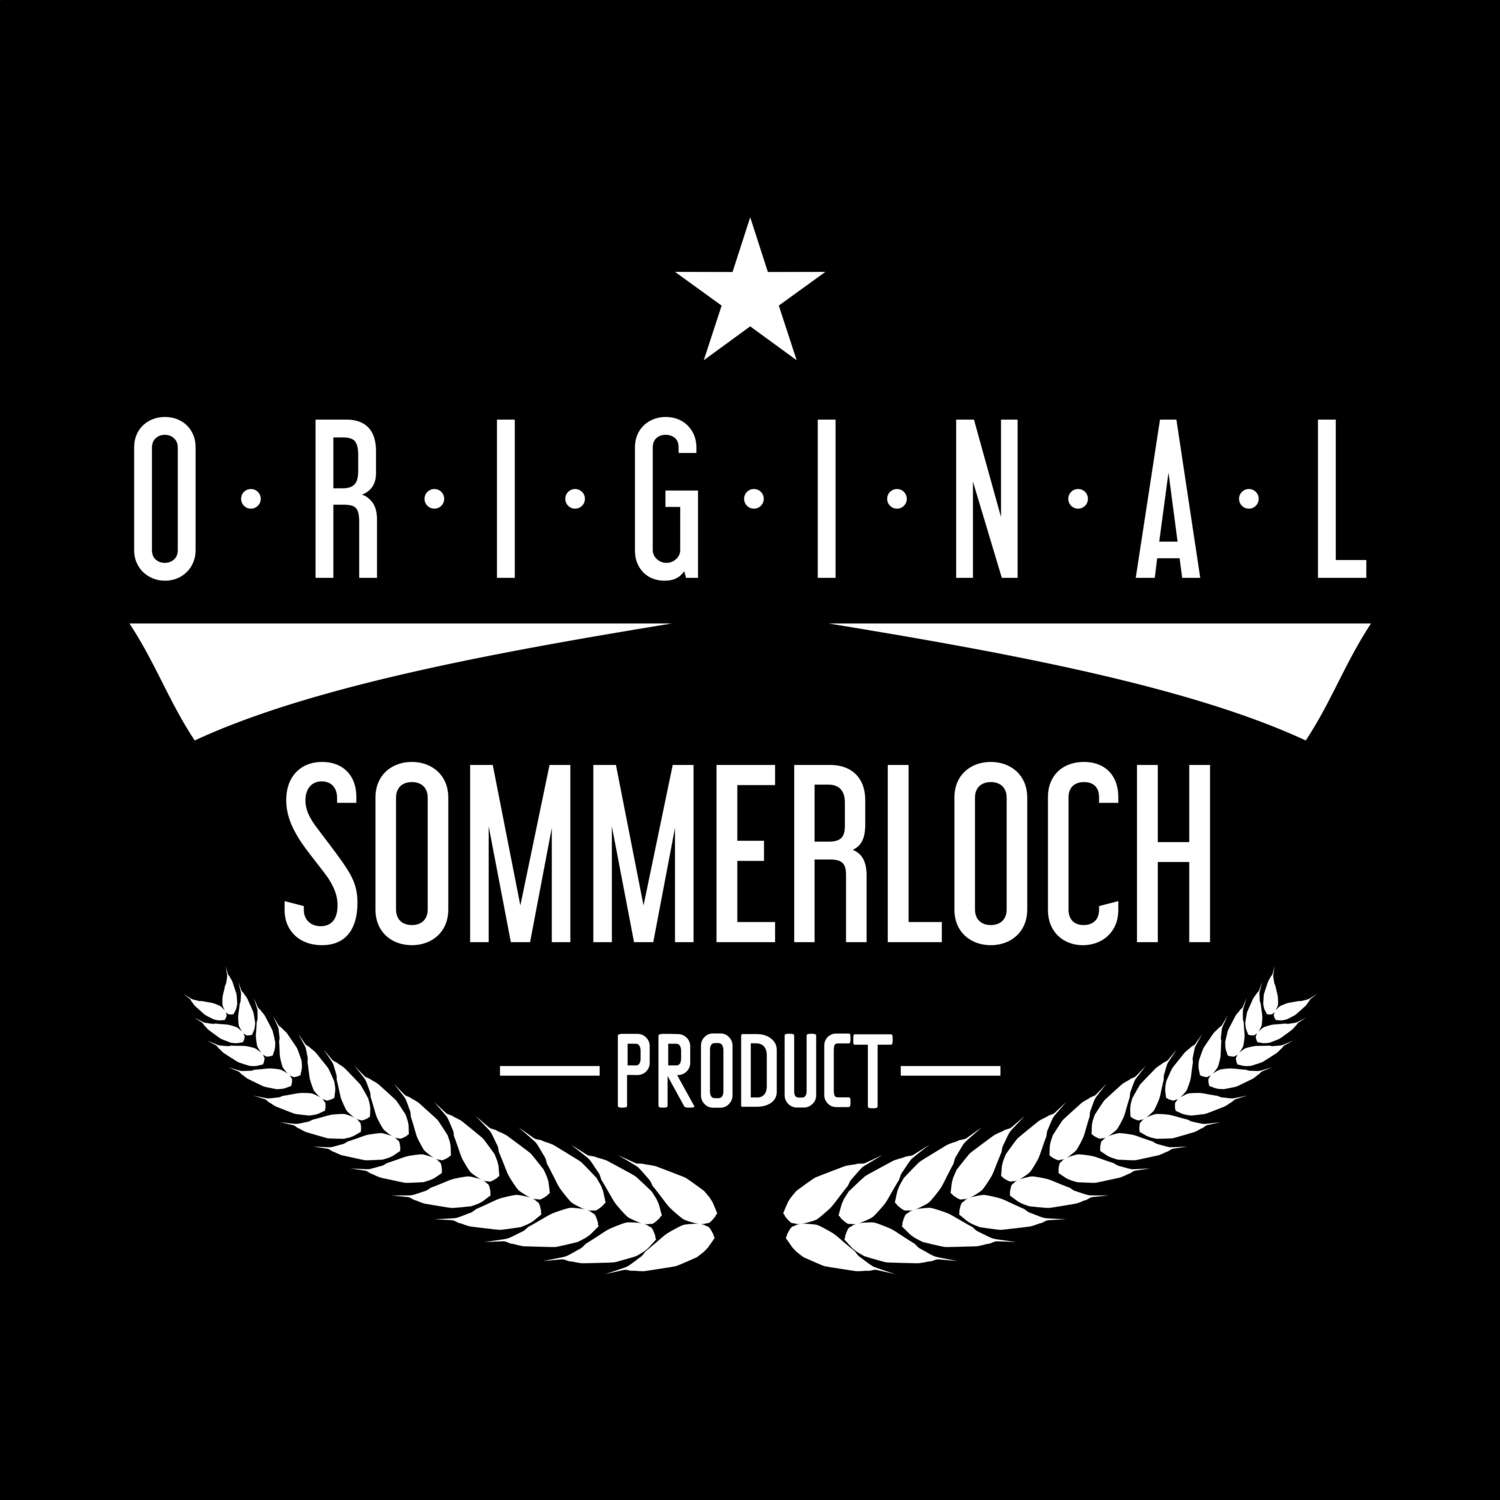 Sommerloch T-Shirt »Original Product«